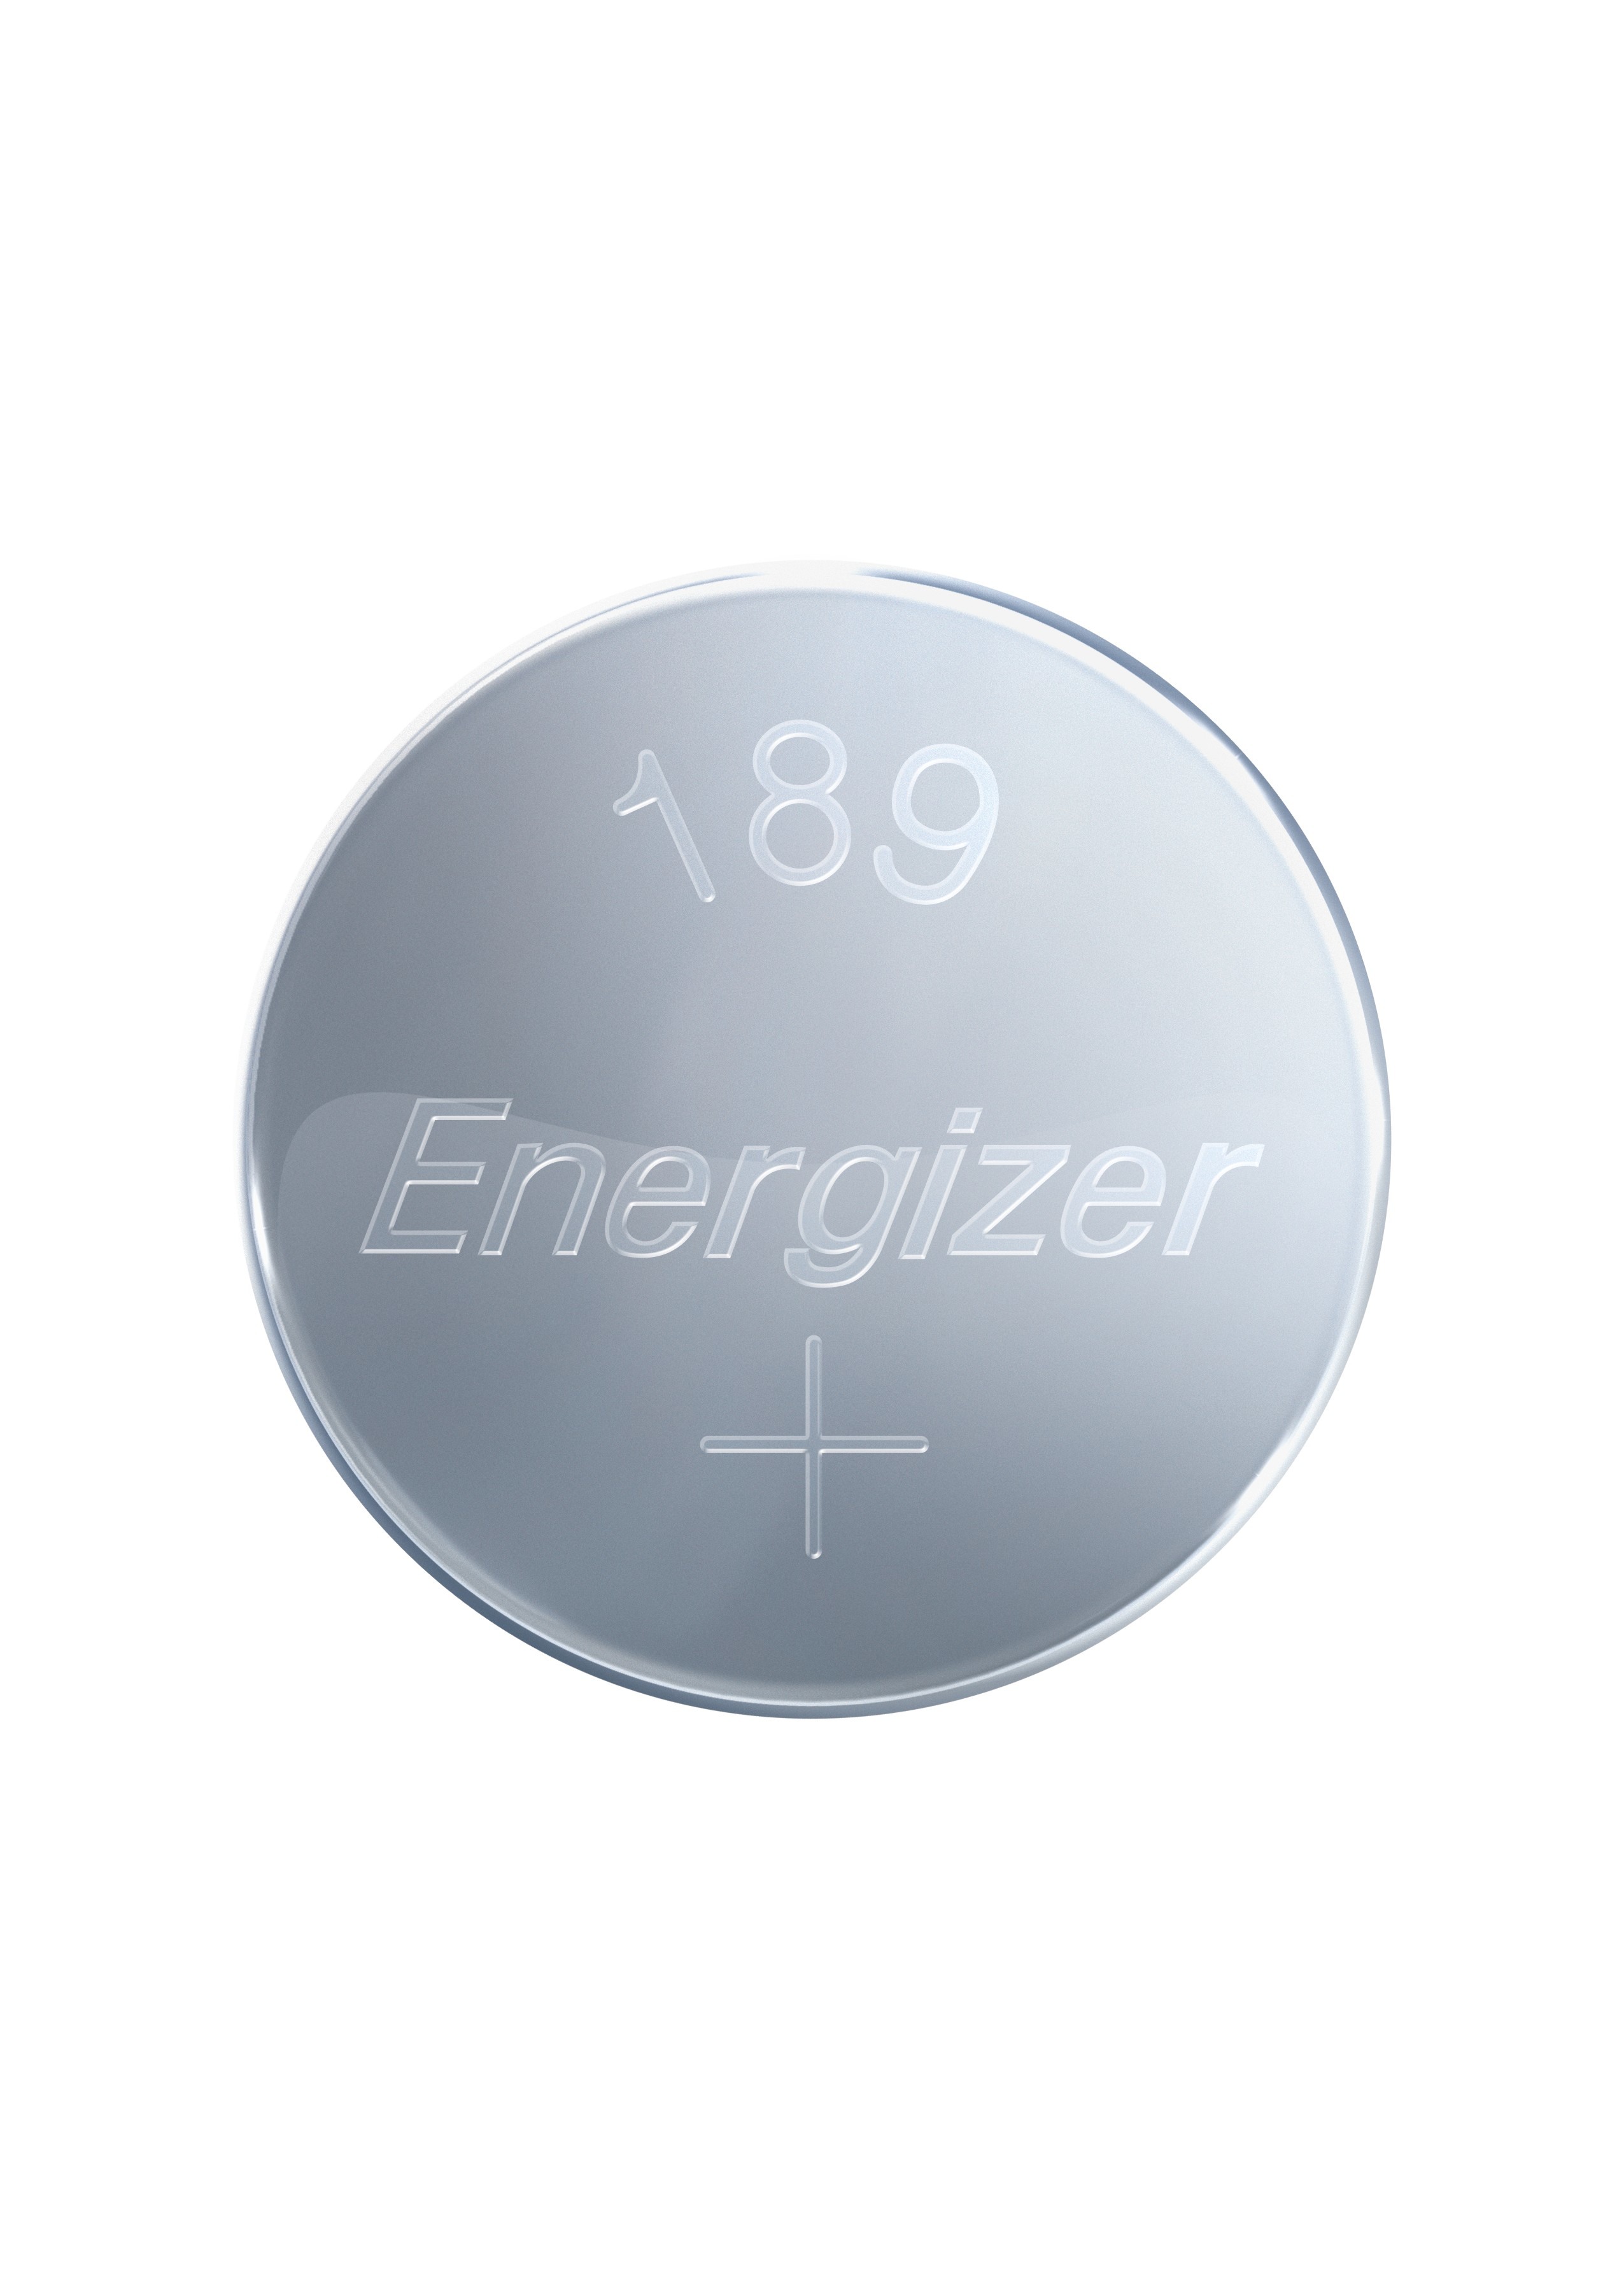 ENERGIZER Batterie Alkali 1,5 V E301536700 LR54/189 2 Stück